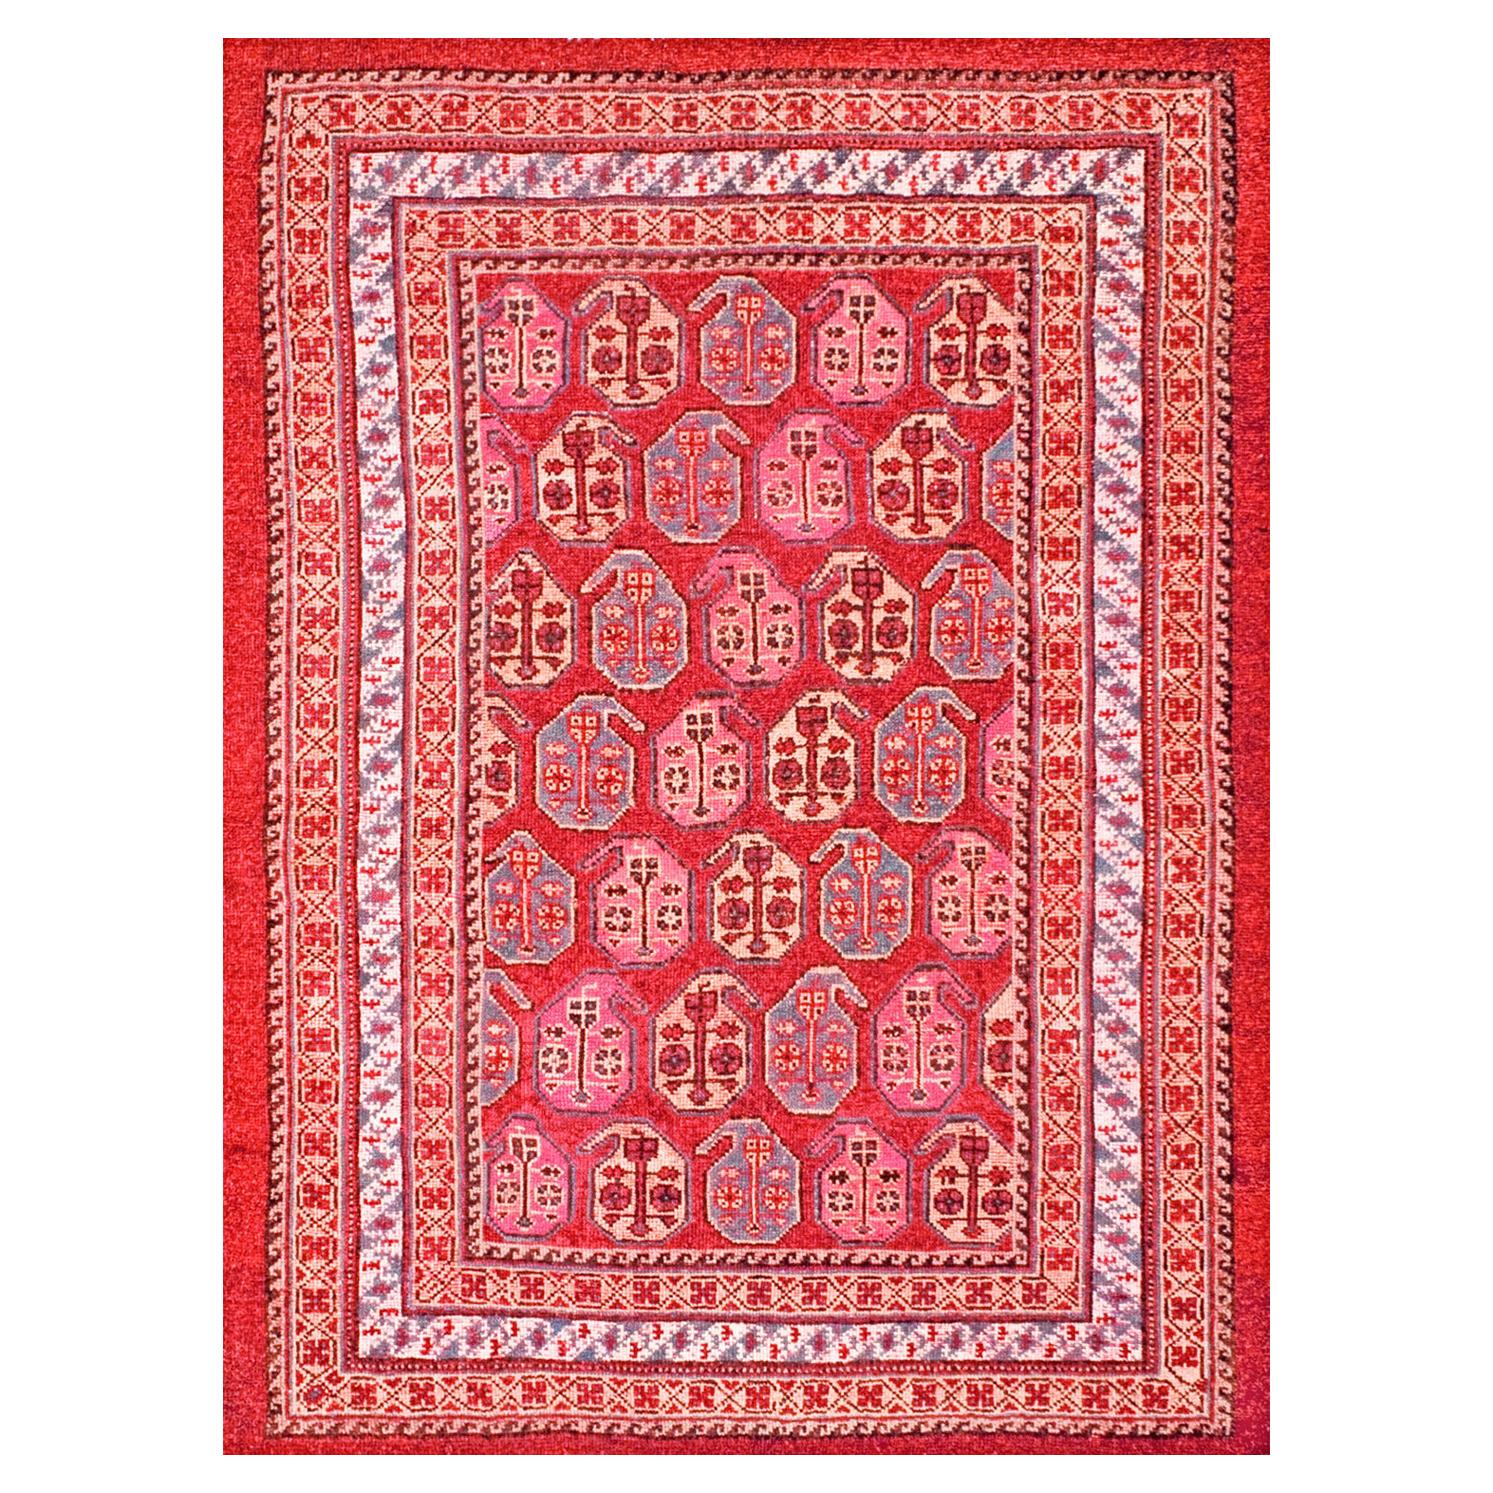 Late 19th Century Turkish Oushak Carpet ( 5' x 6'9" - 152 x 206 ) For Sale